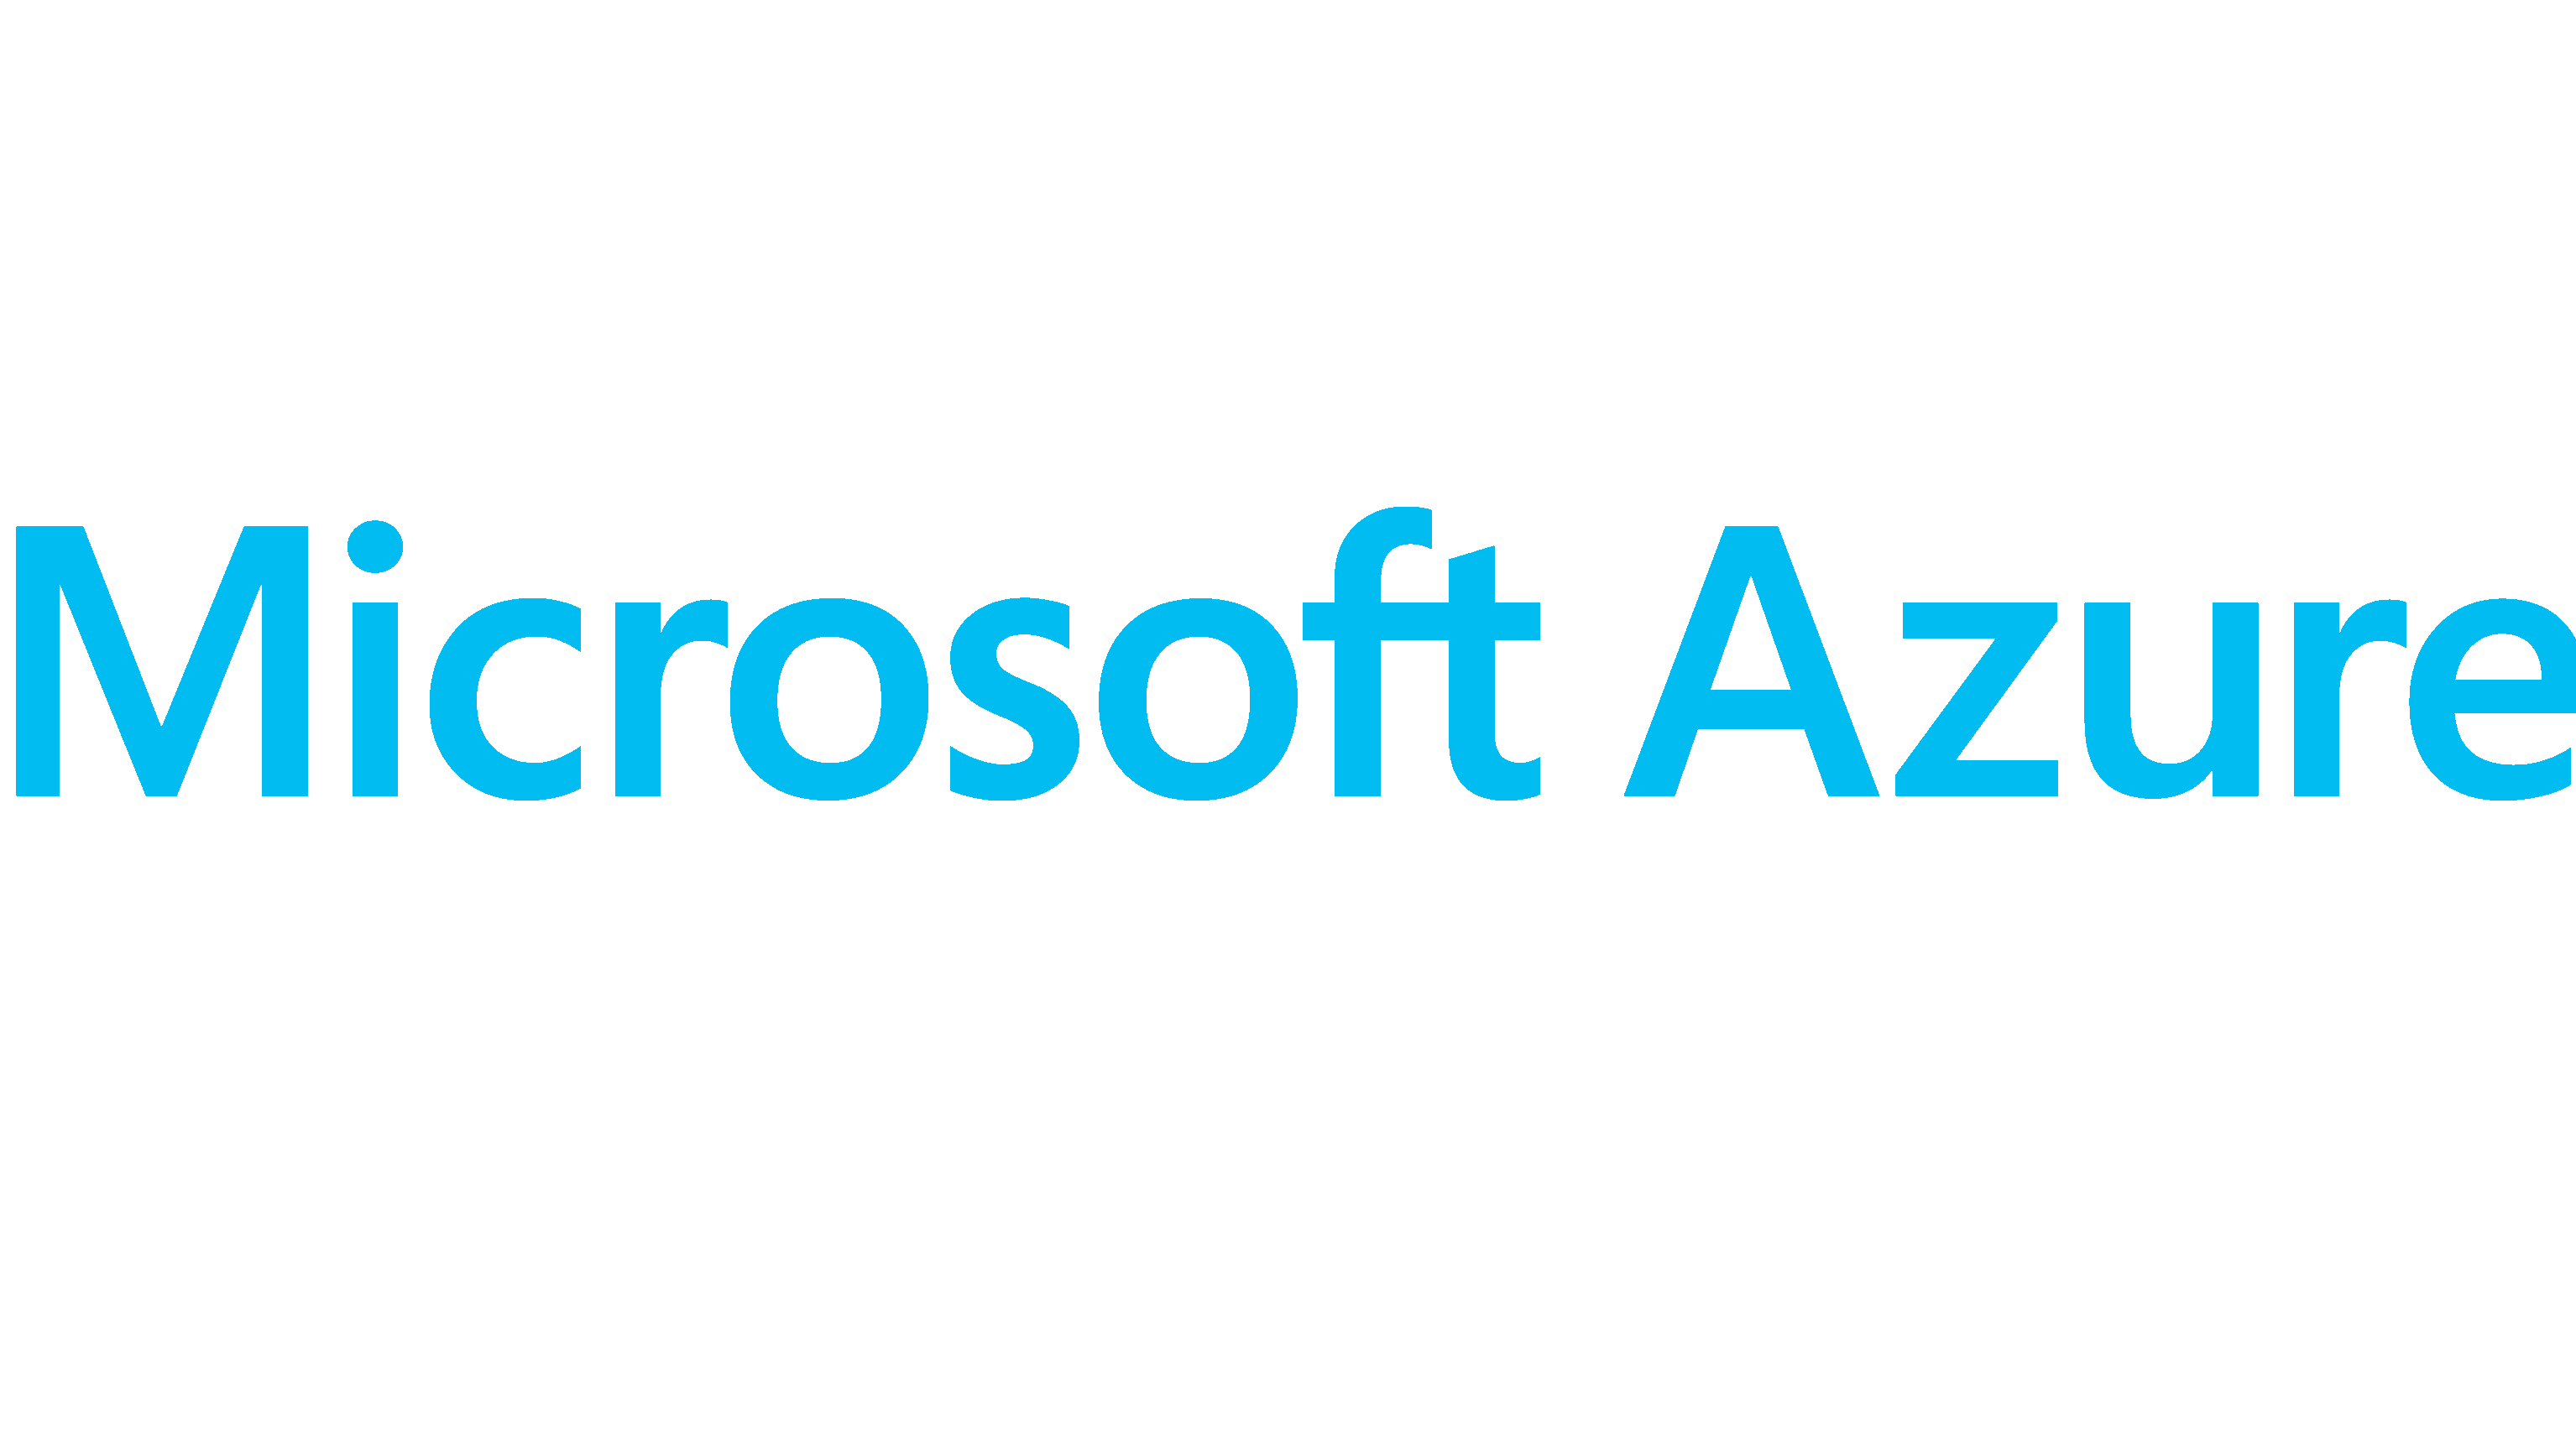 Azure Tips 第一期： Azure 中的安全监视工具，数据存储， 动态数据屏蔽以及资源部署